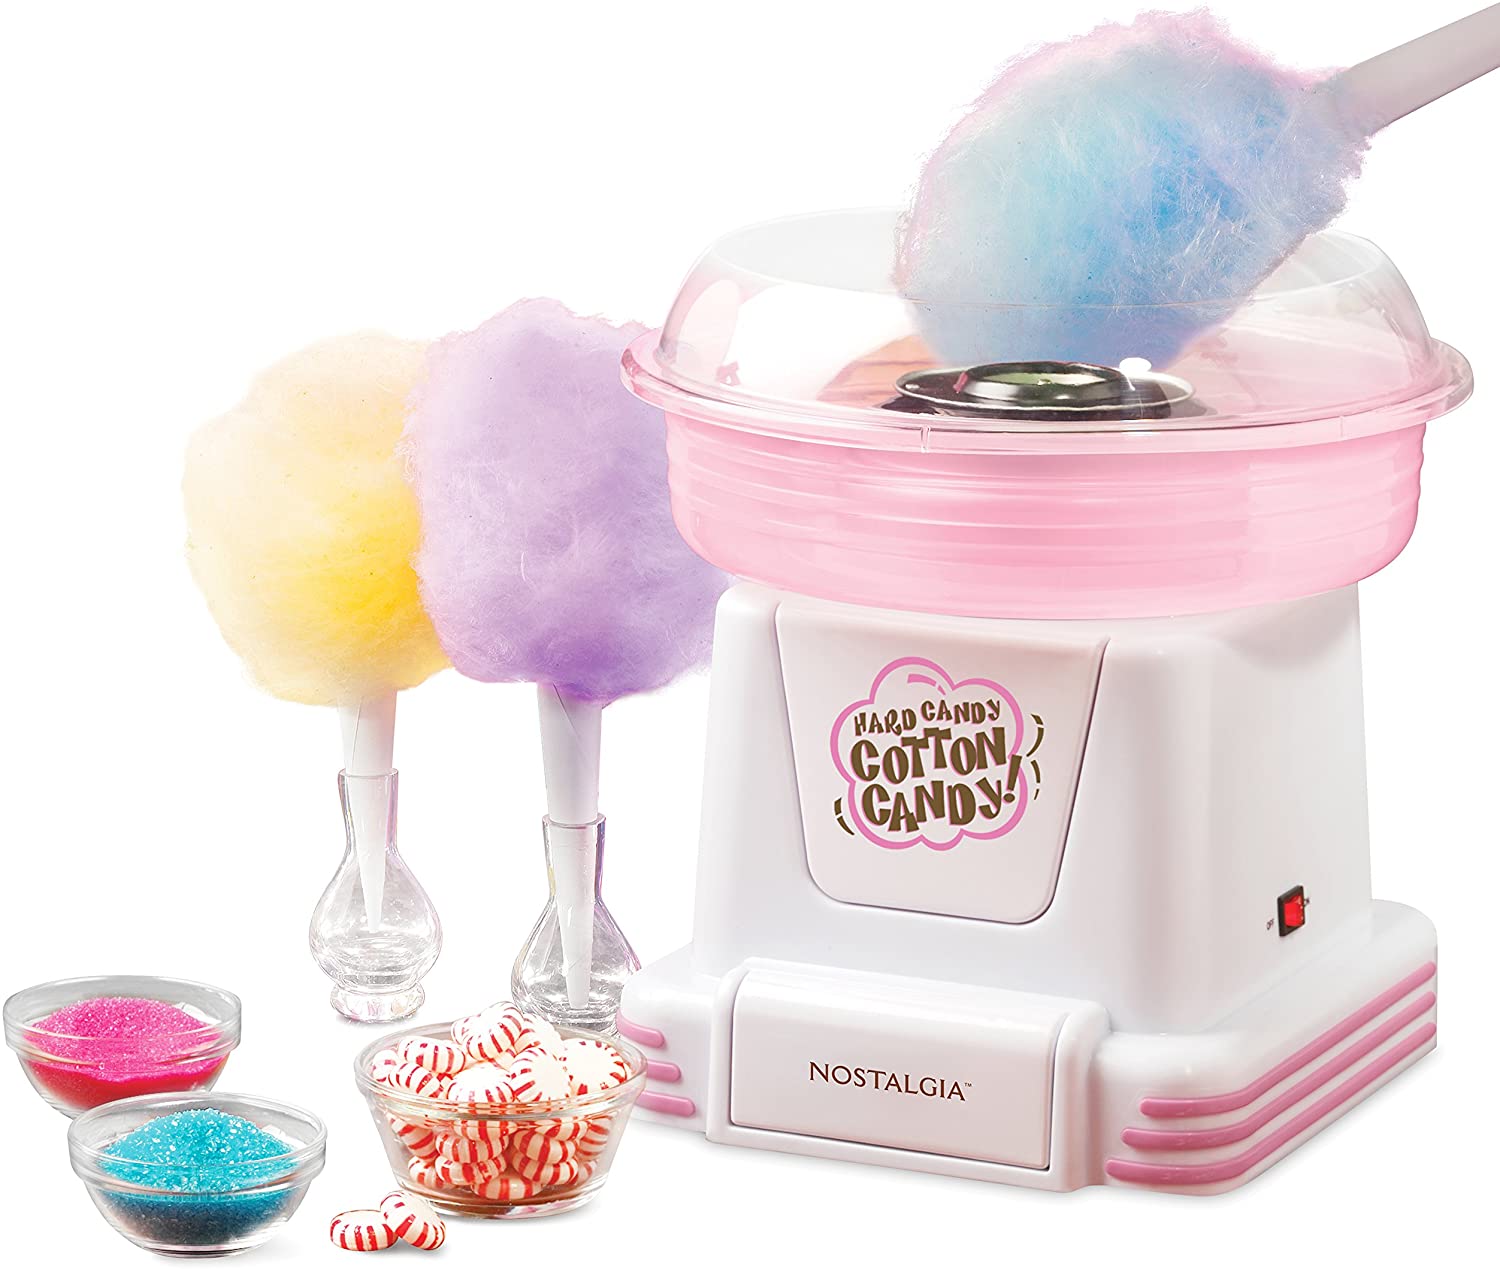 Maquina algodón de azucar - ECOKIDS Alquiler de juguetes infantiles